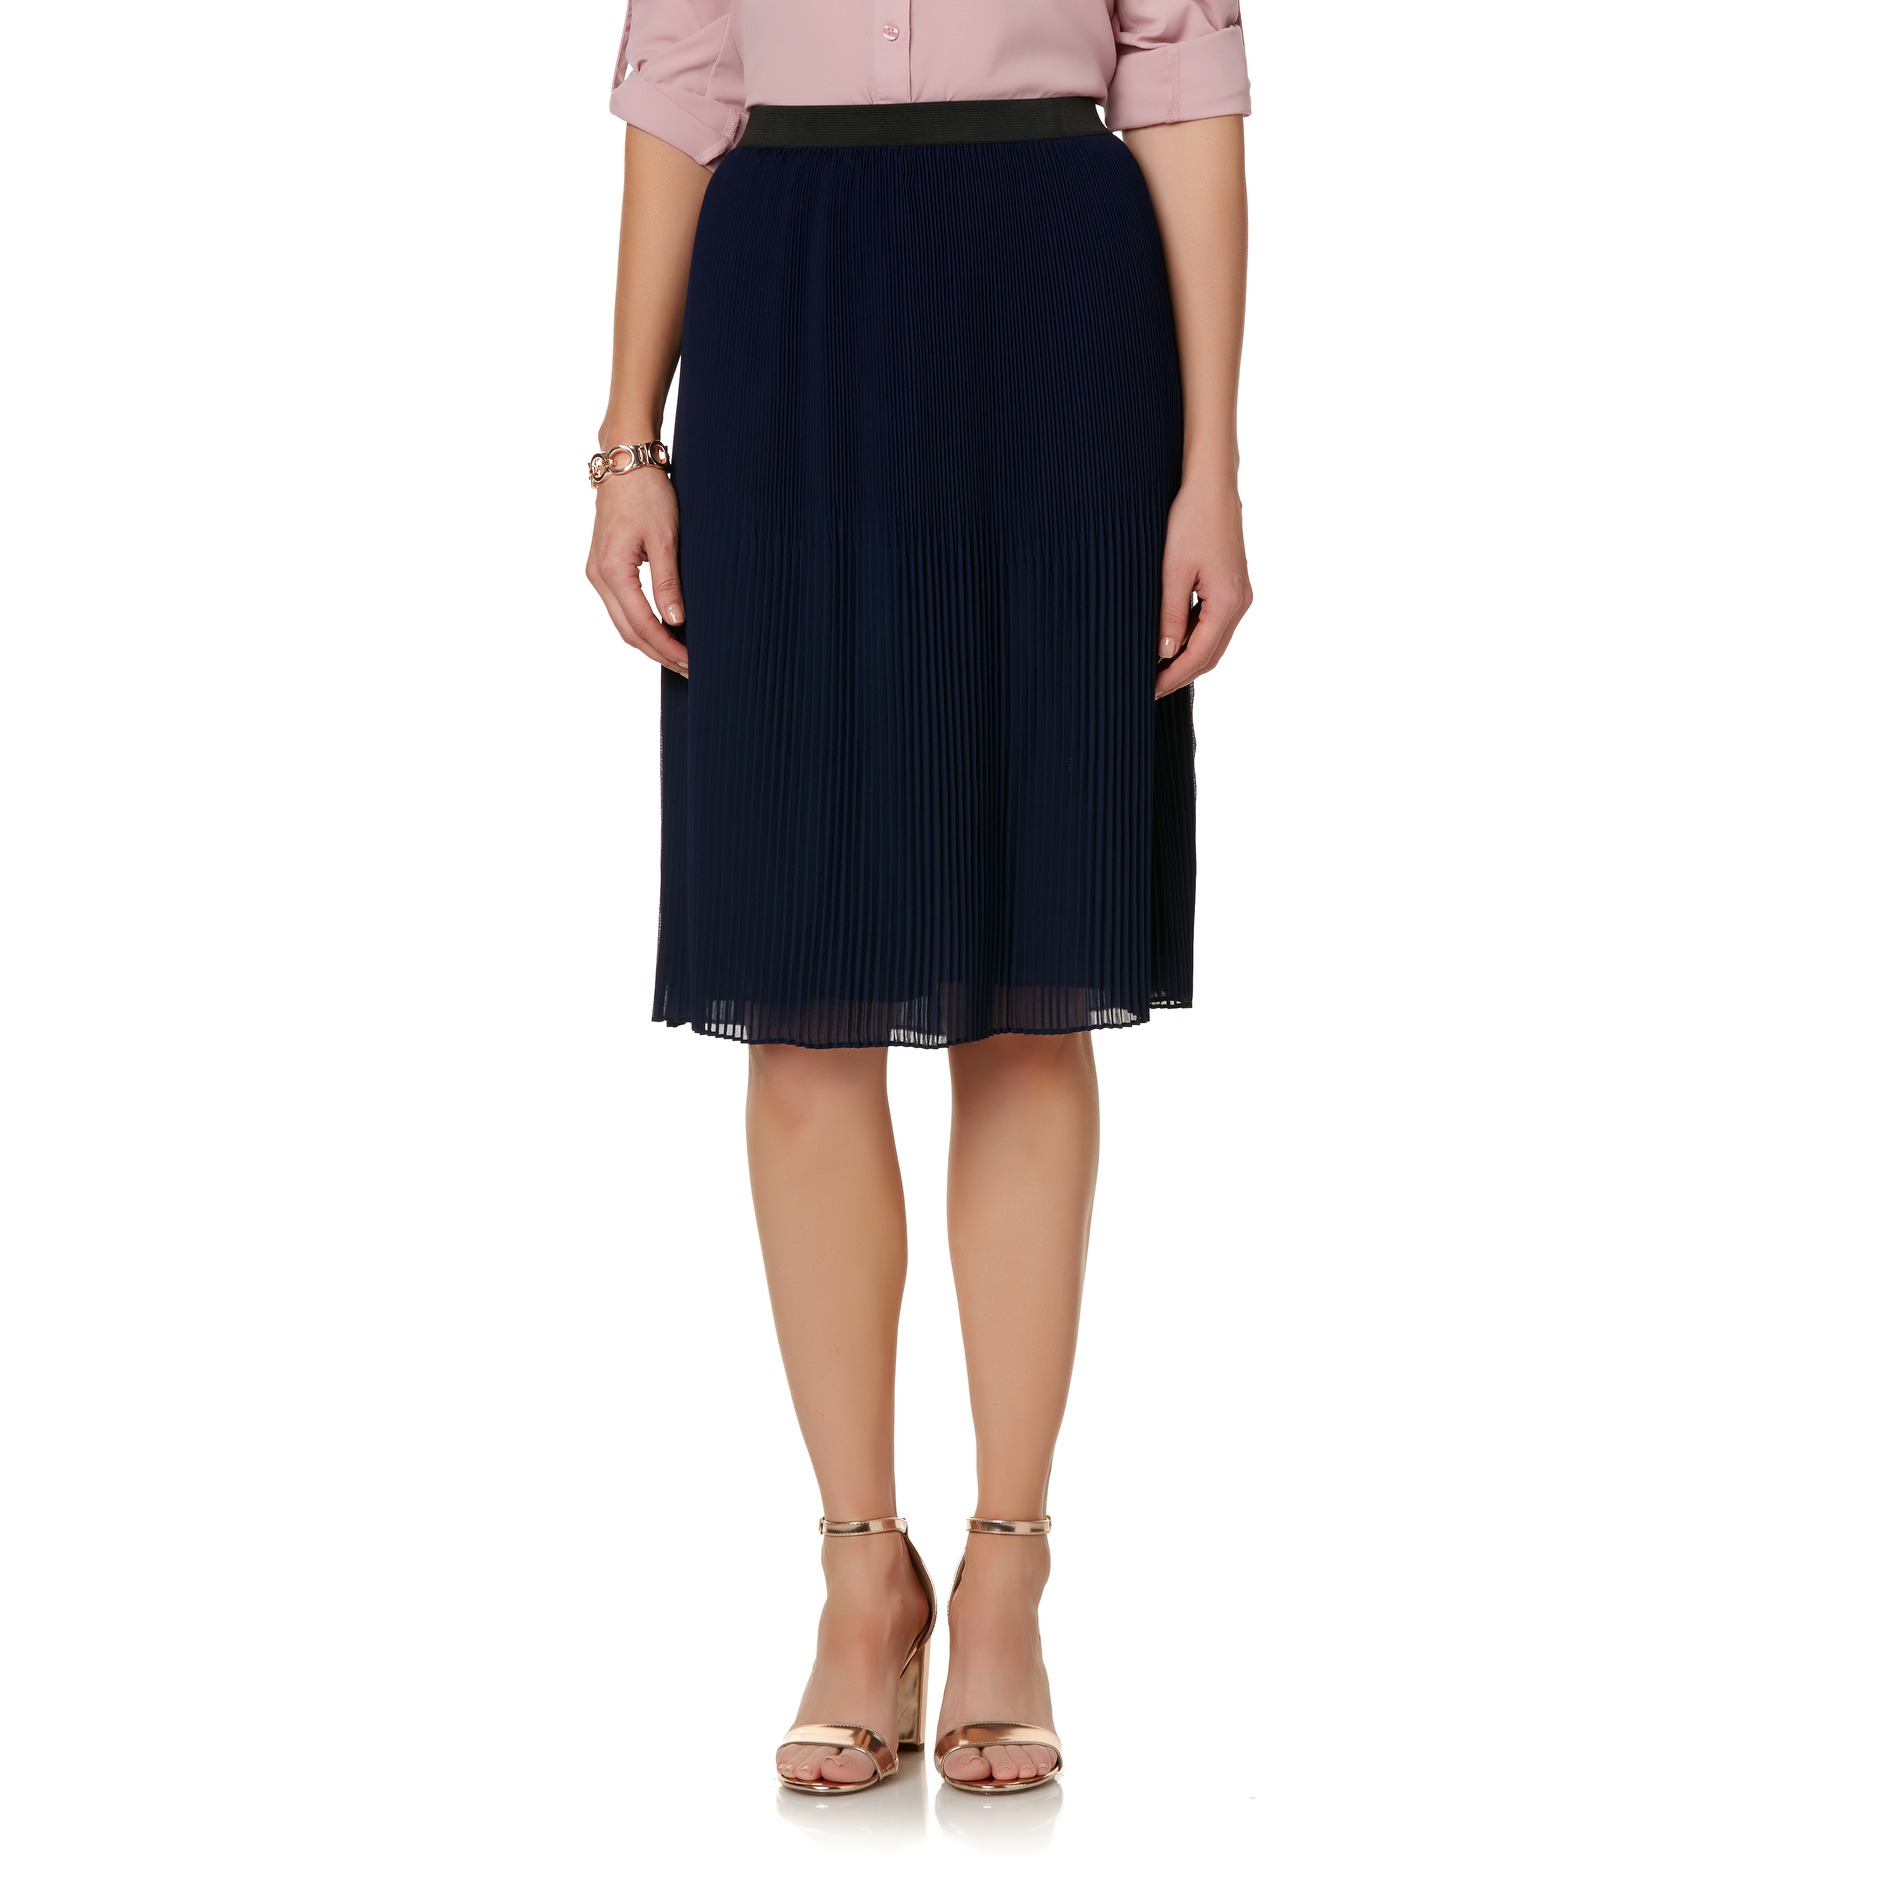 Jaclyn Smith Women's Pleated Skirt